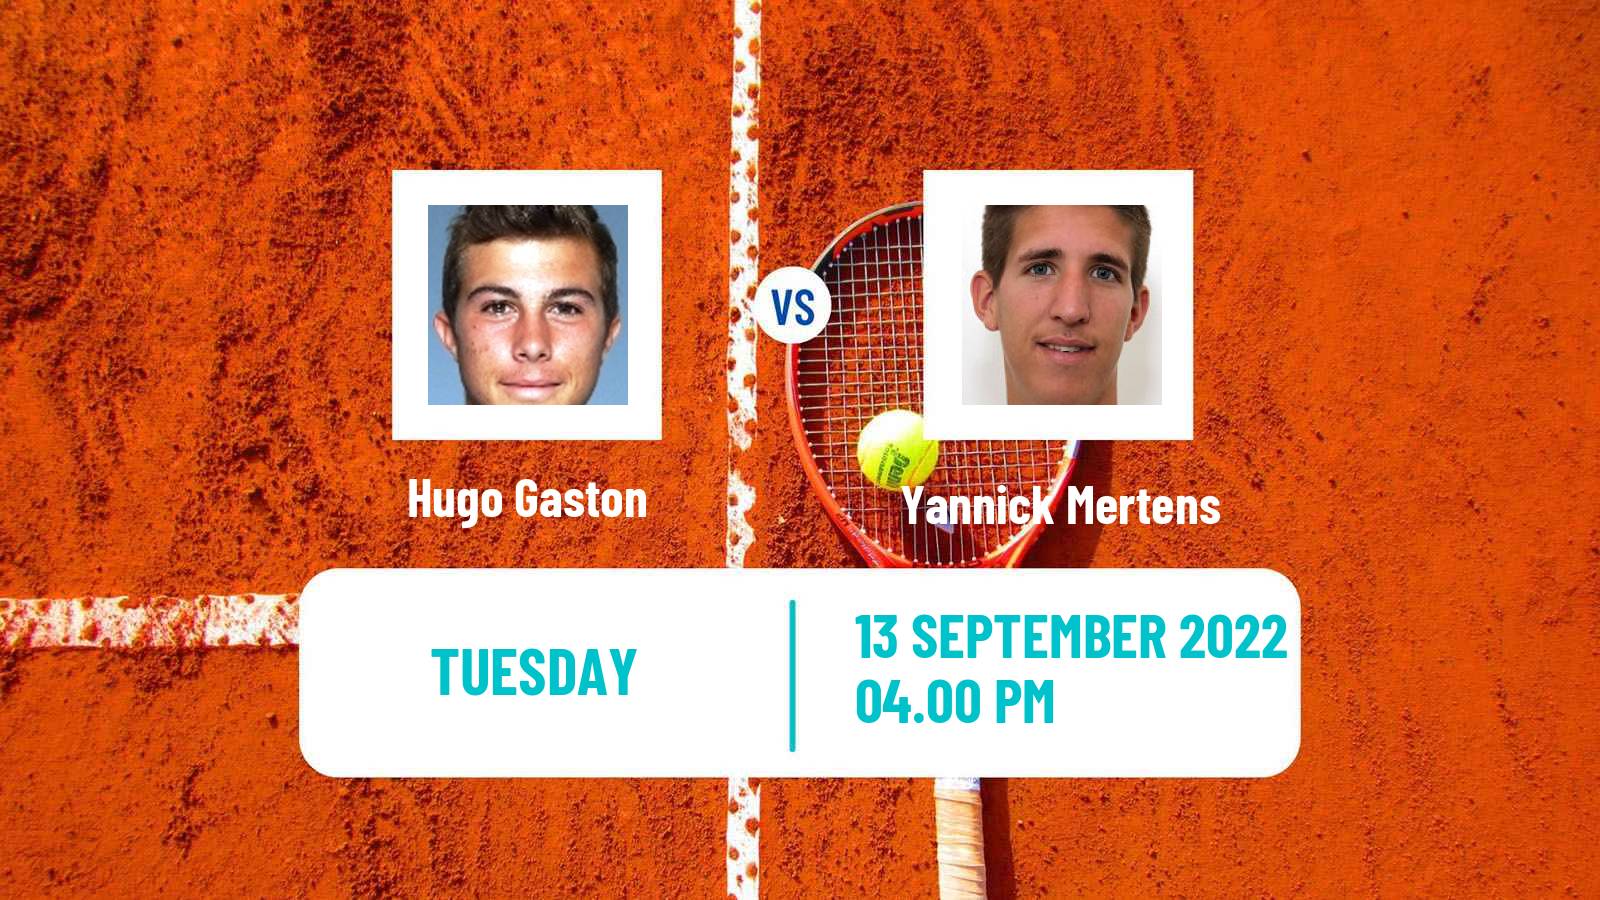 Tennis ATP Challenger Hugo Gaston - Yannick Mertens